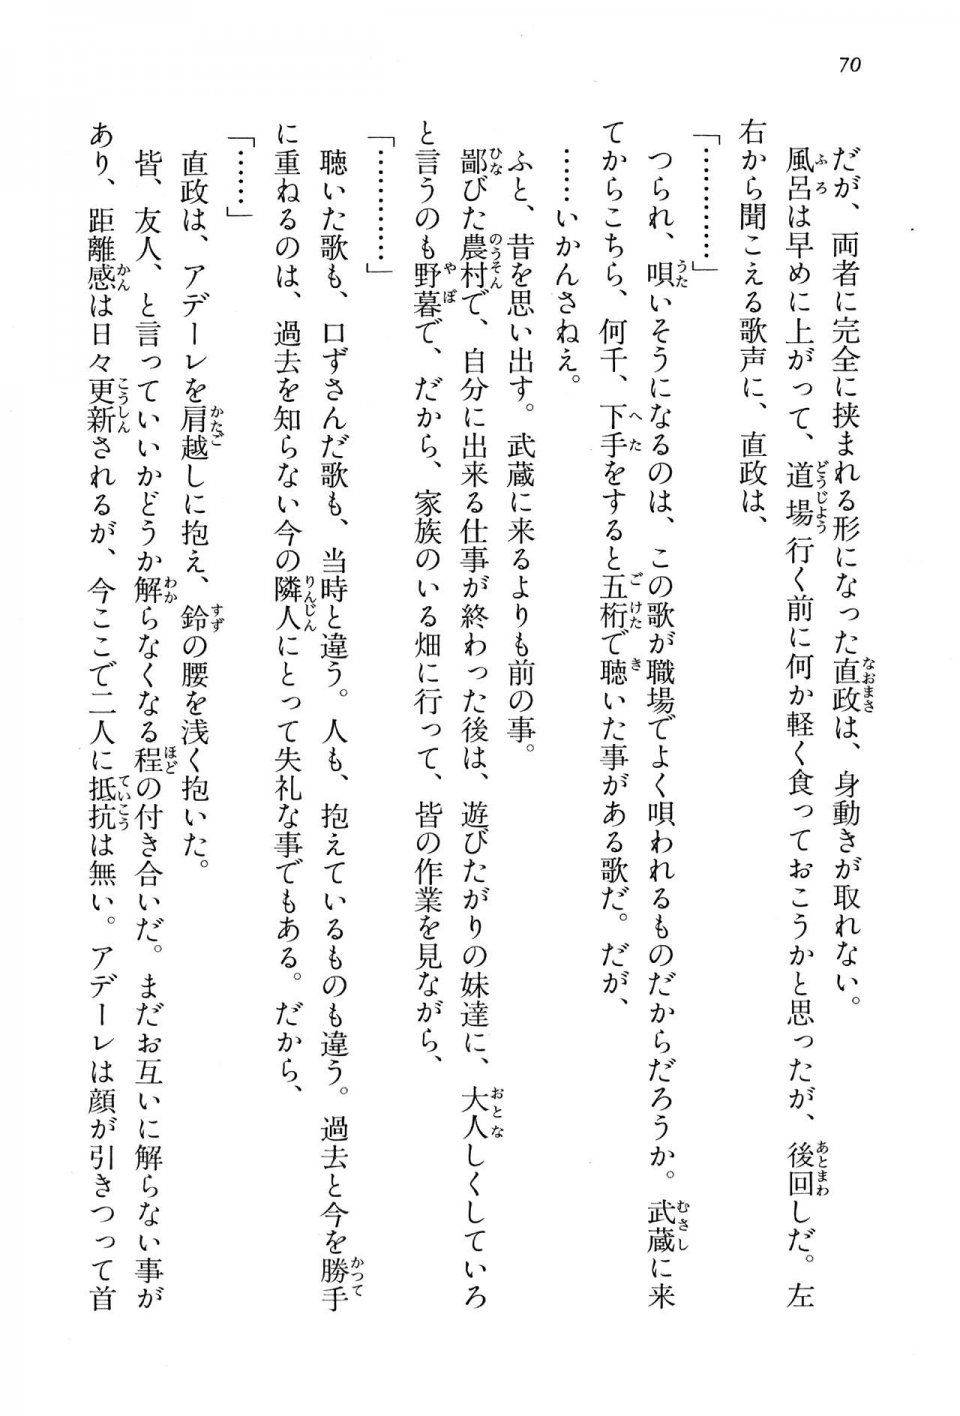 Kyoukai Senjou no Horizon BD Special Mininovel Vol 3(2A) - Photo #74